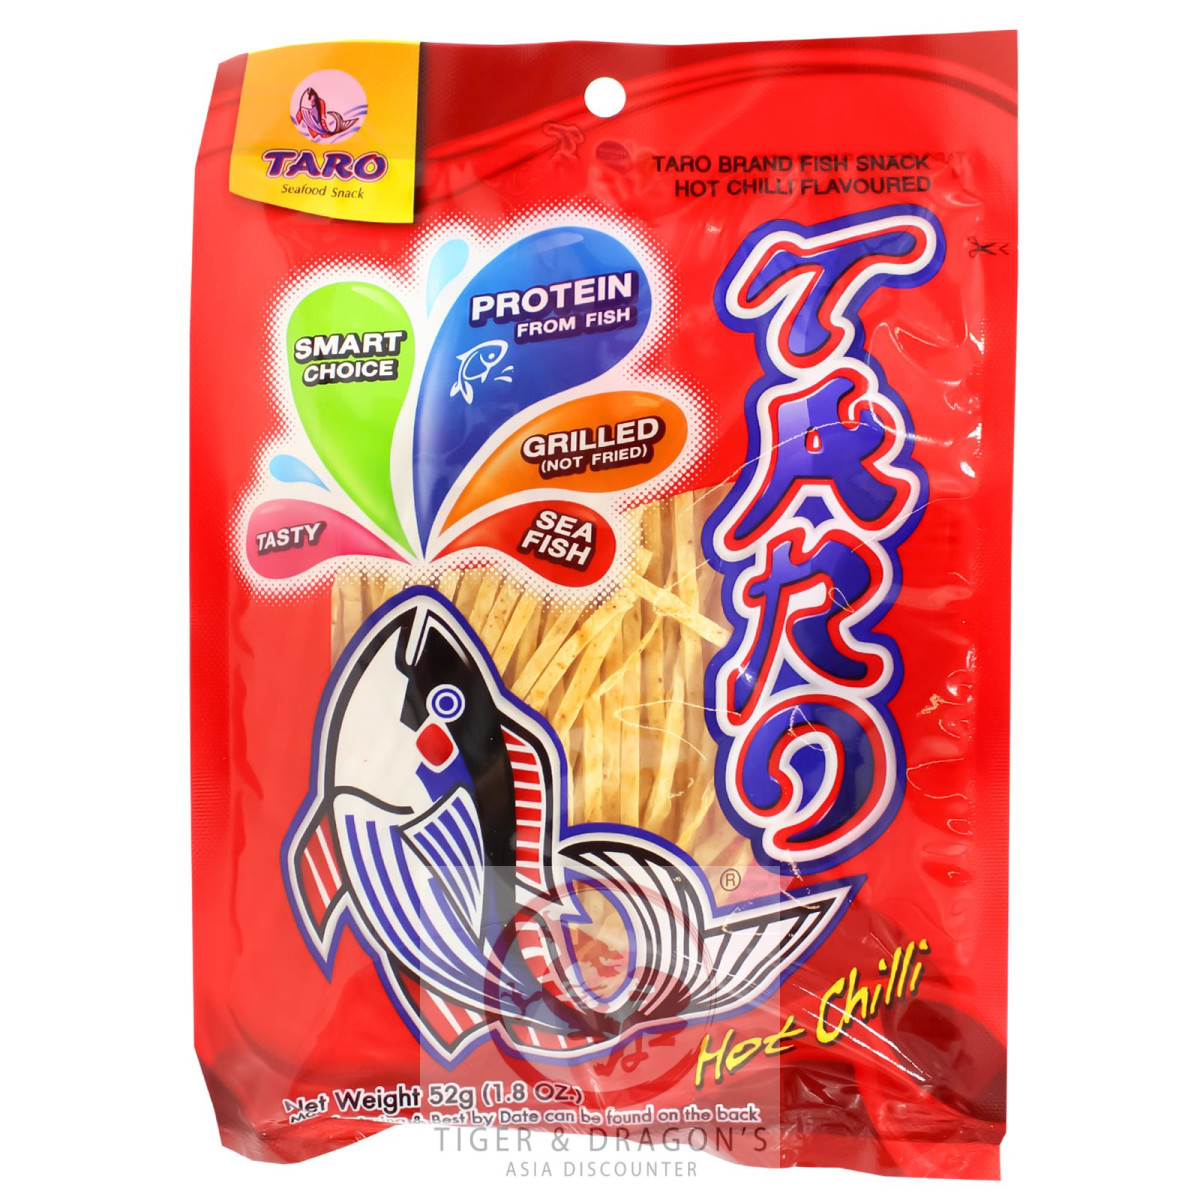 Taro Fish Snack Hot Chilli Flavour 52g (rot)